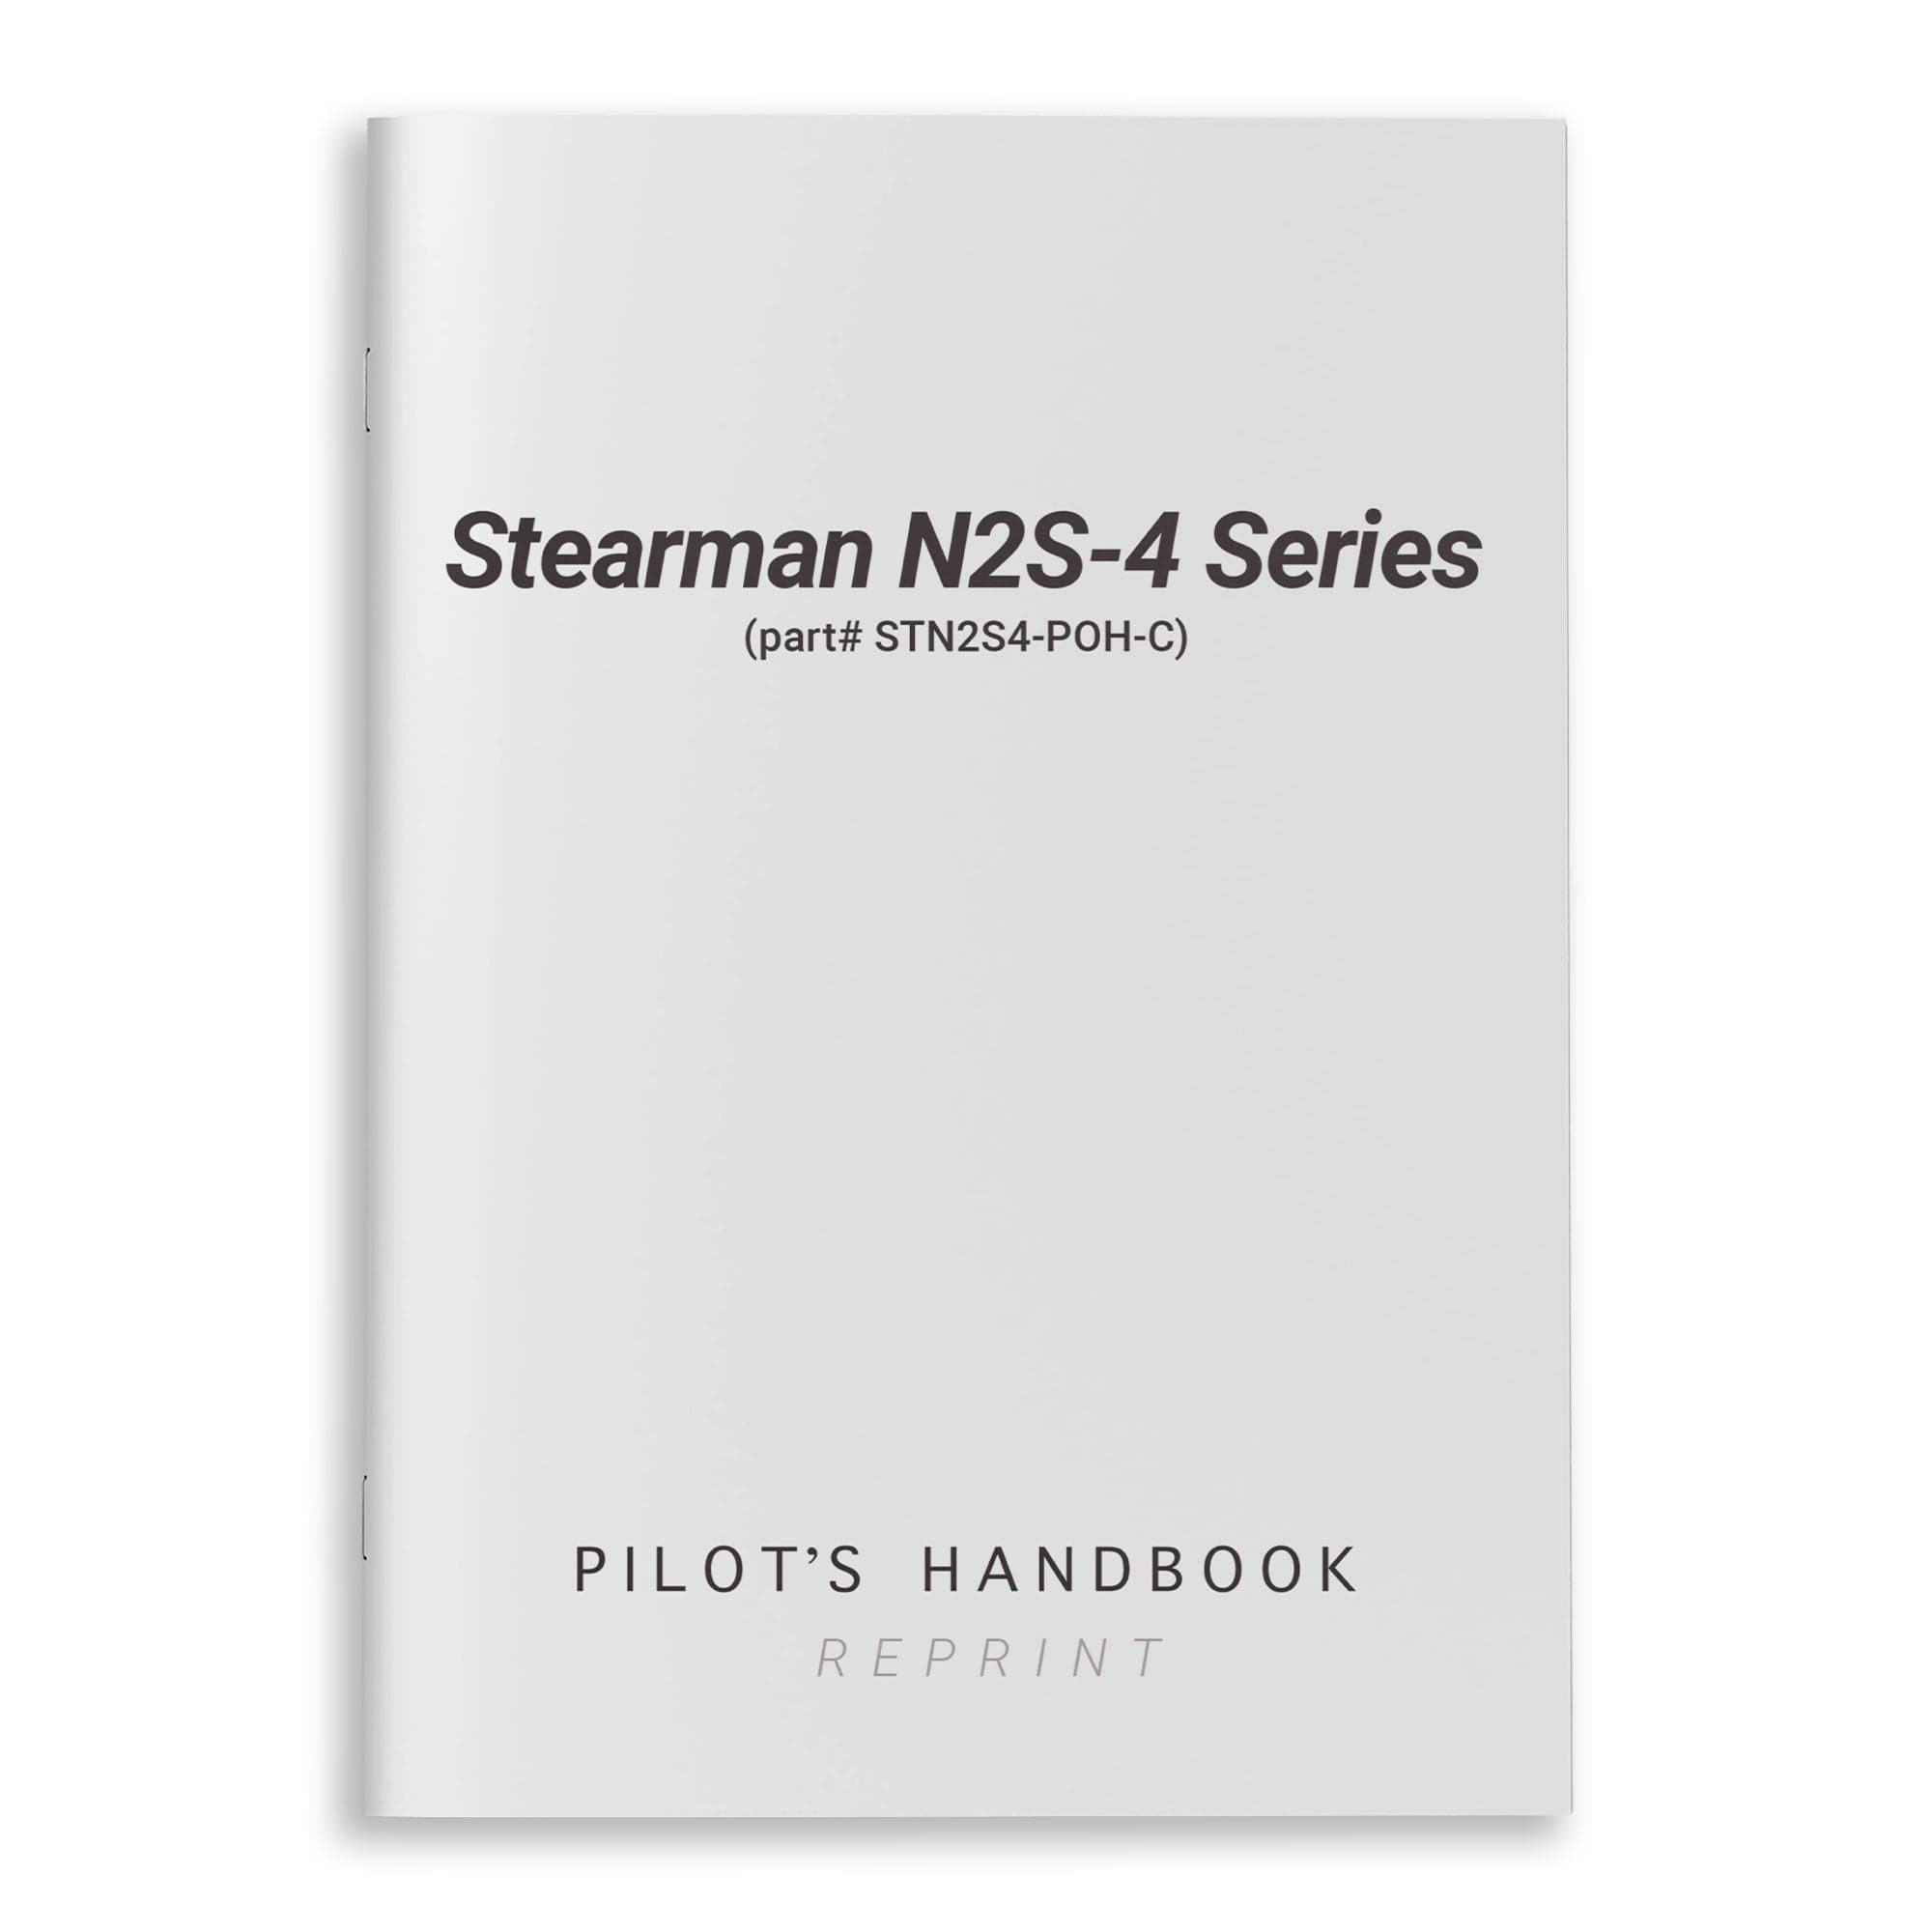 Stearman N2S-4 Series Pilot's Handbook (part# STN2S4-POH-C) - PilotMall.com